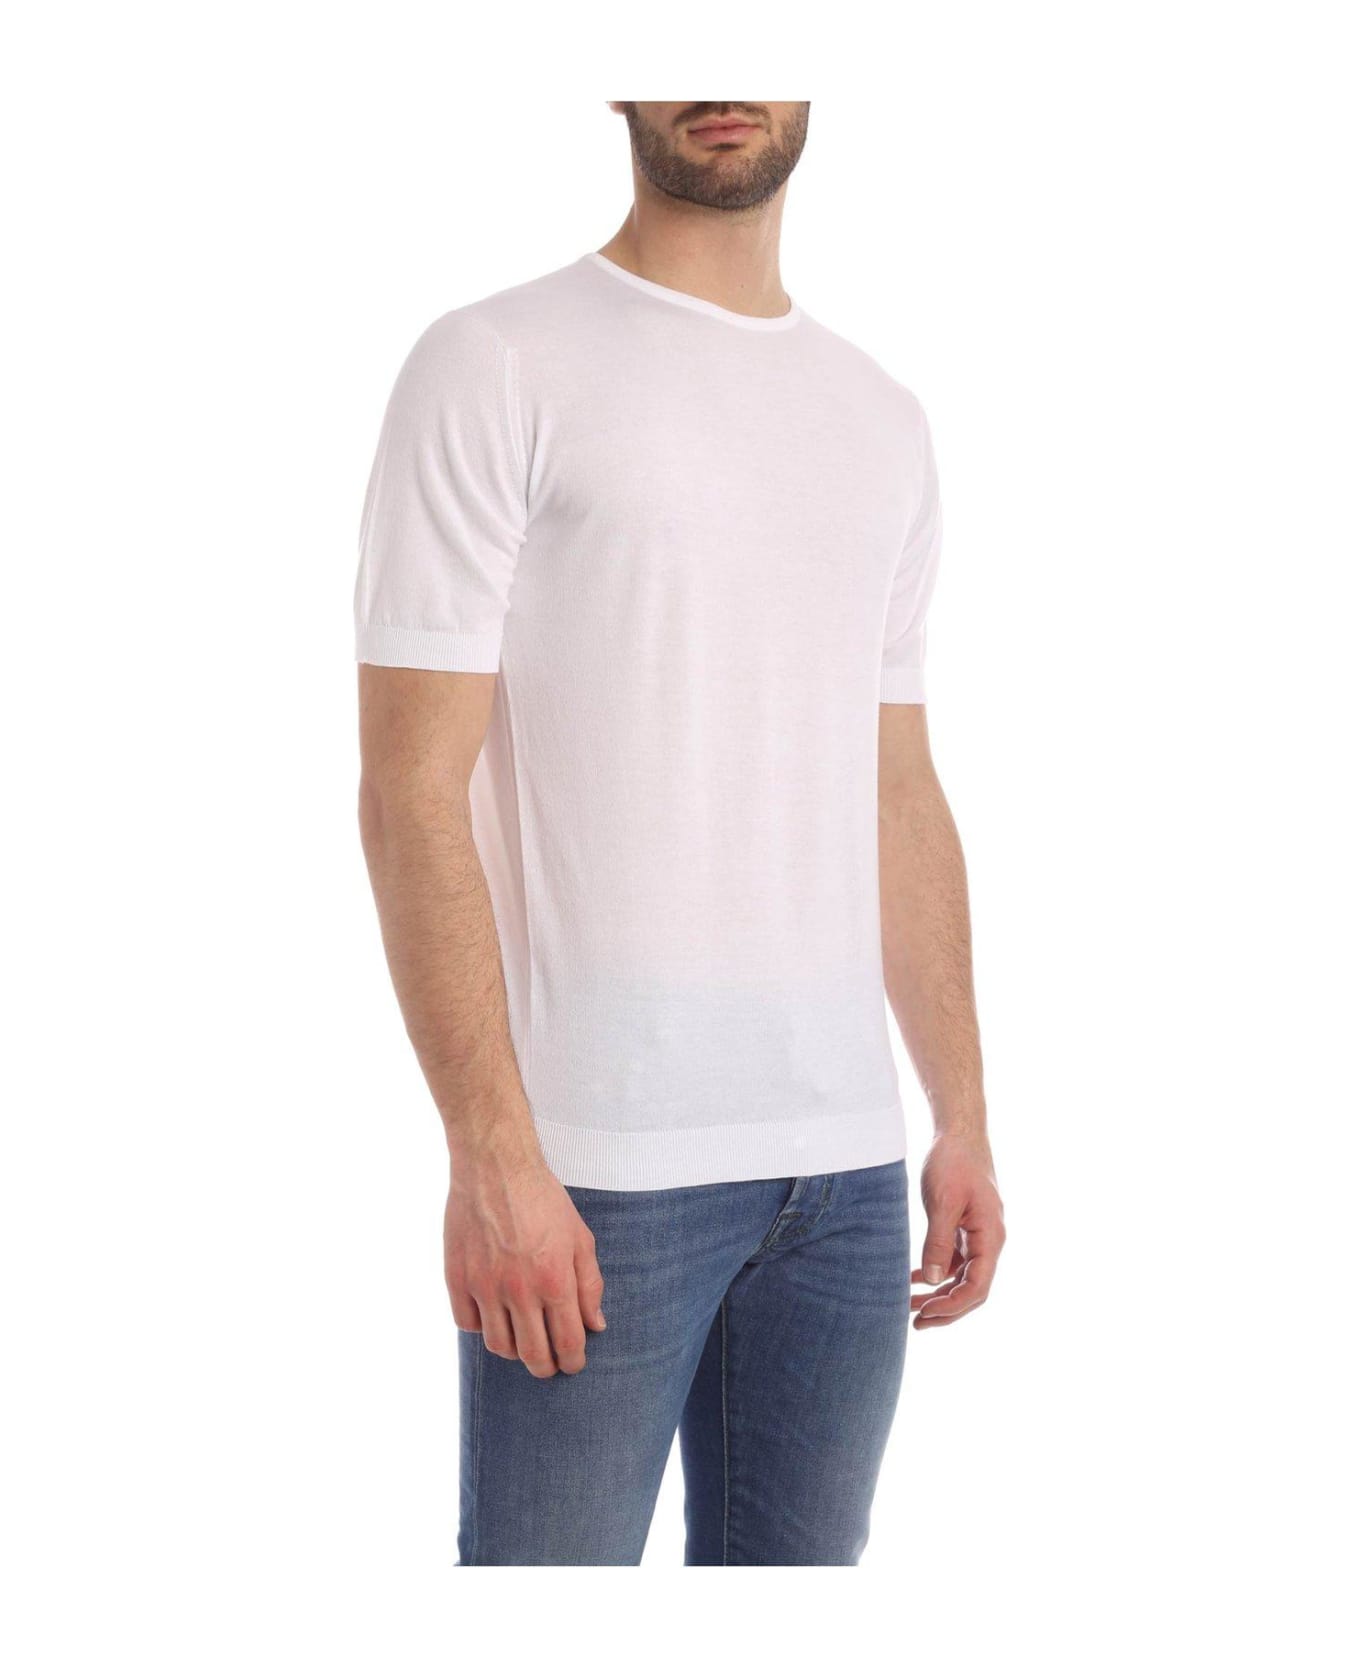 John Smedley Belden Classic T-shirt - WHITE